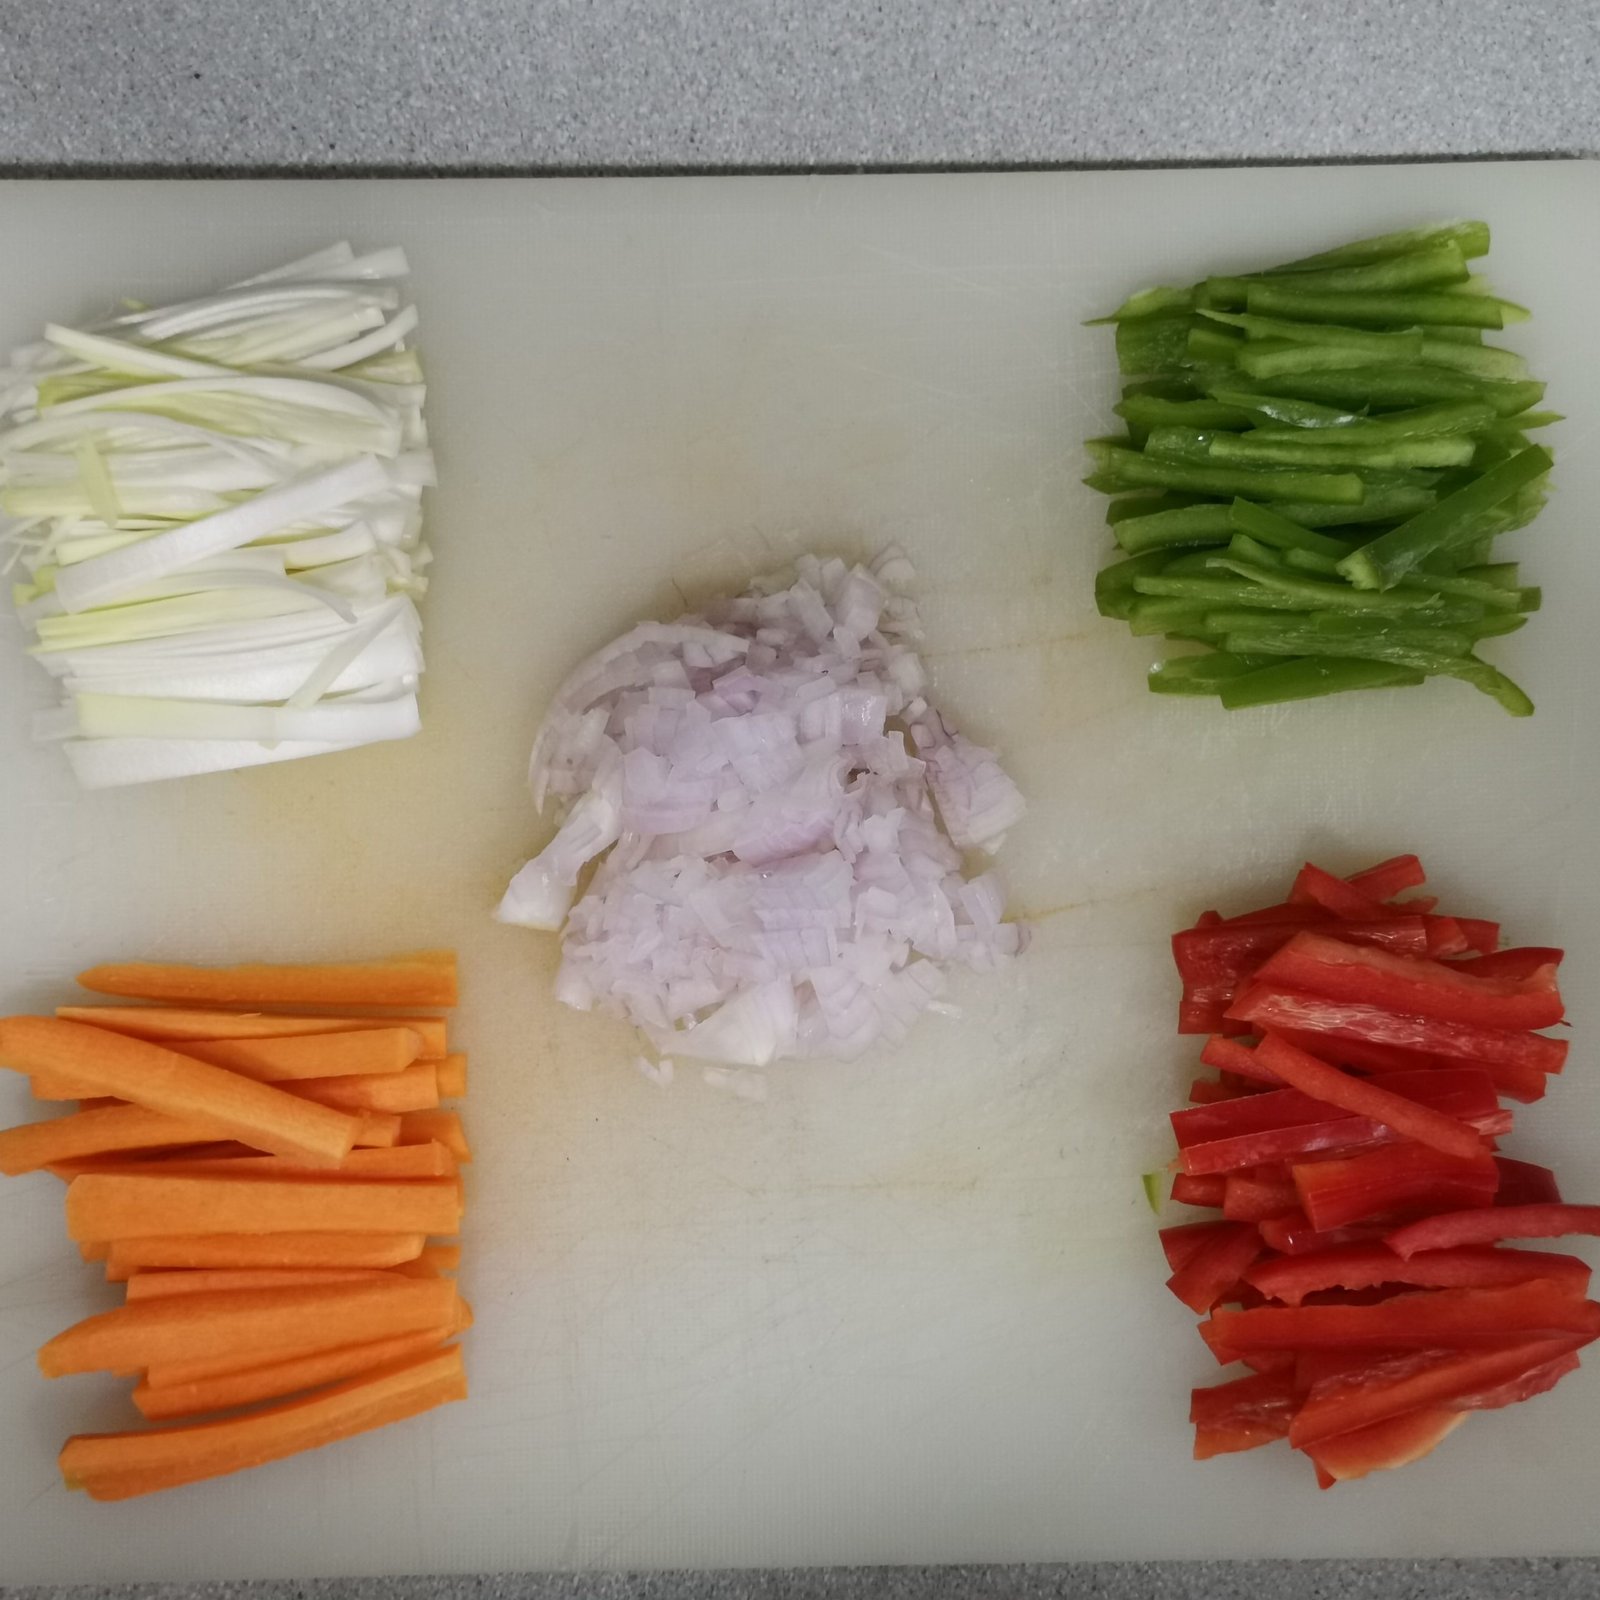 Vermicelli - verduras cortadas